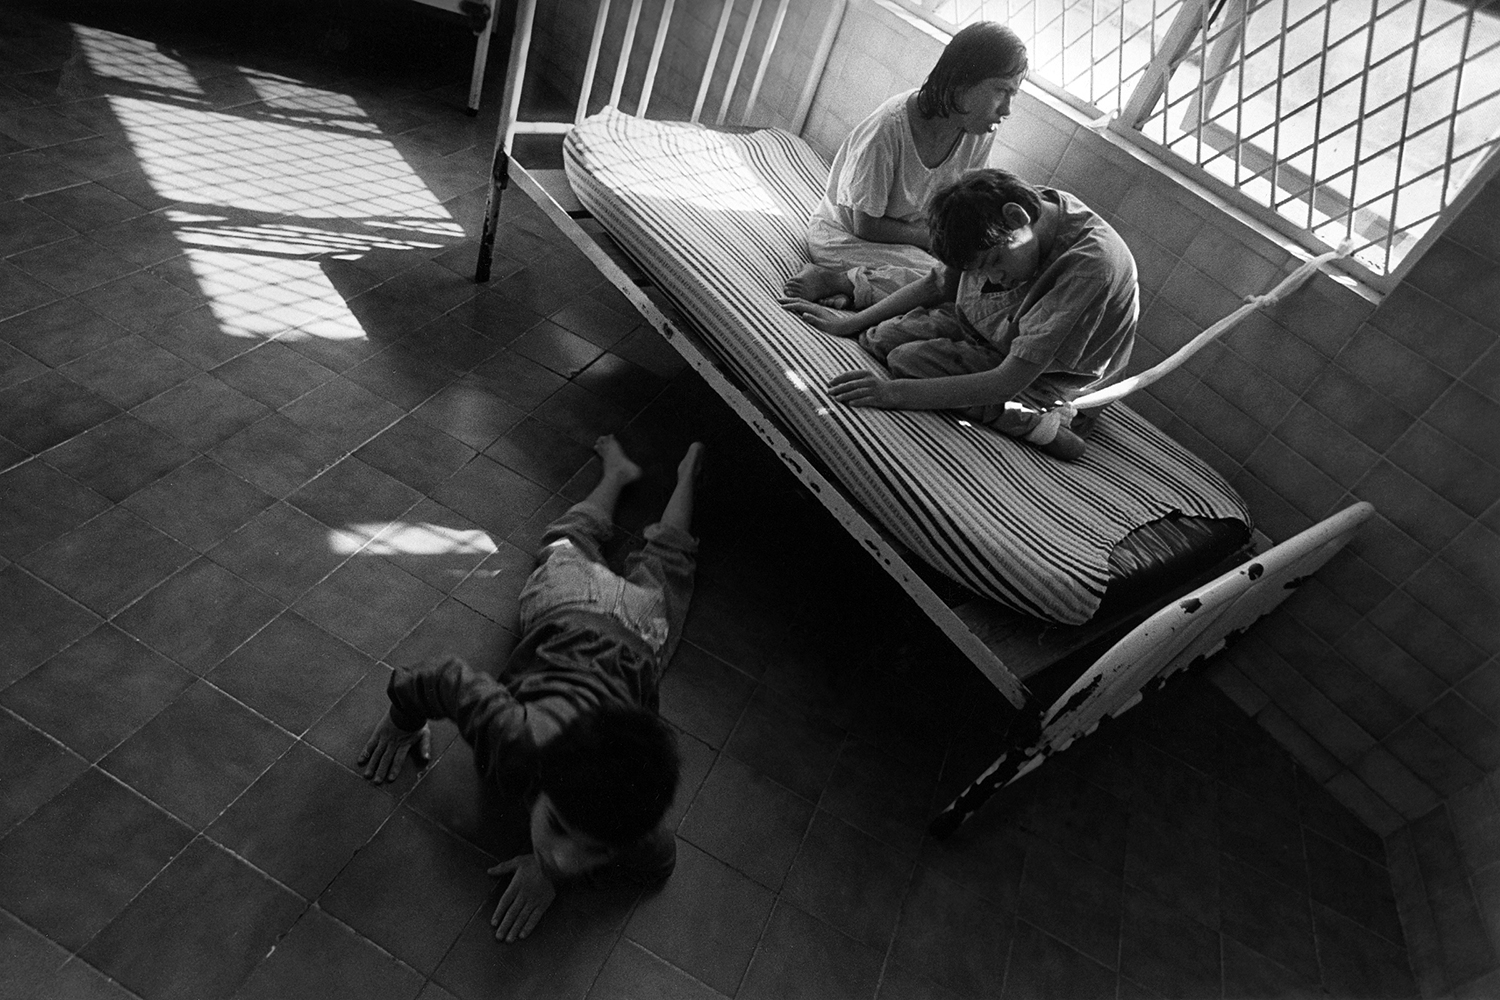   Children's ward  Jalisco Psychiatric Hospital Guadalajara, Mexico &nbsp;1999 